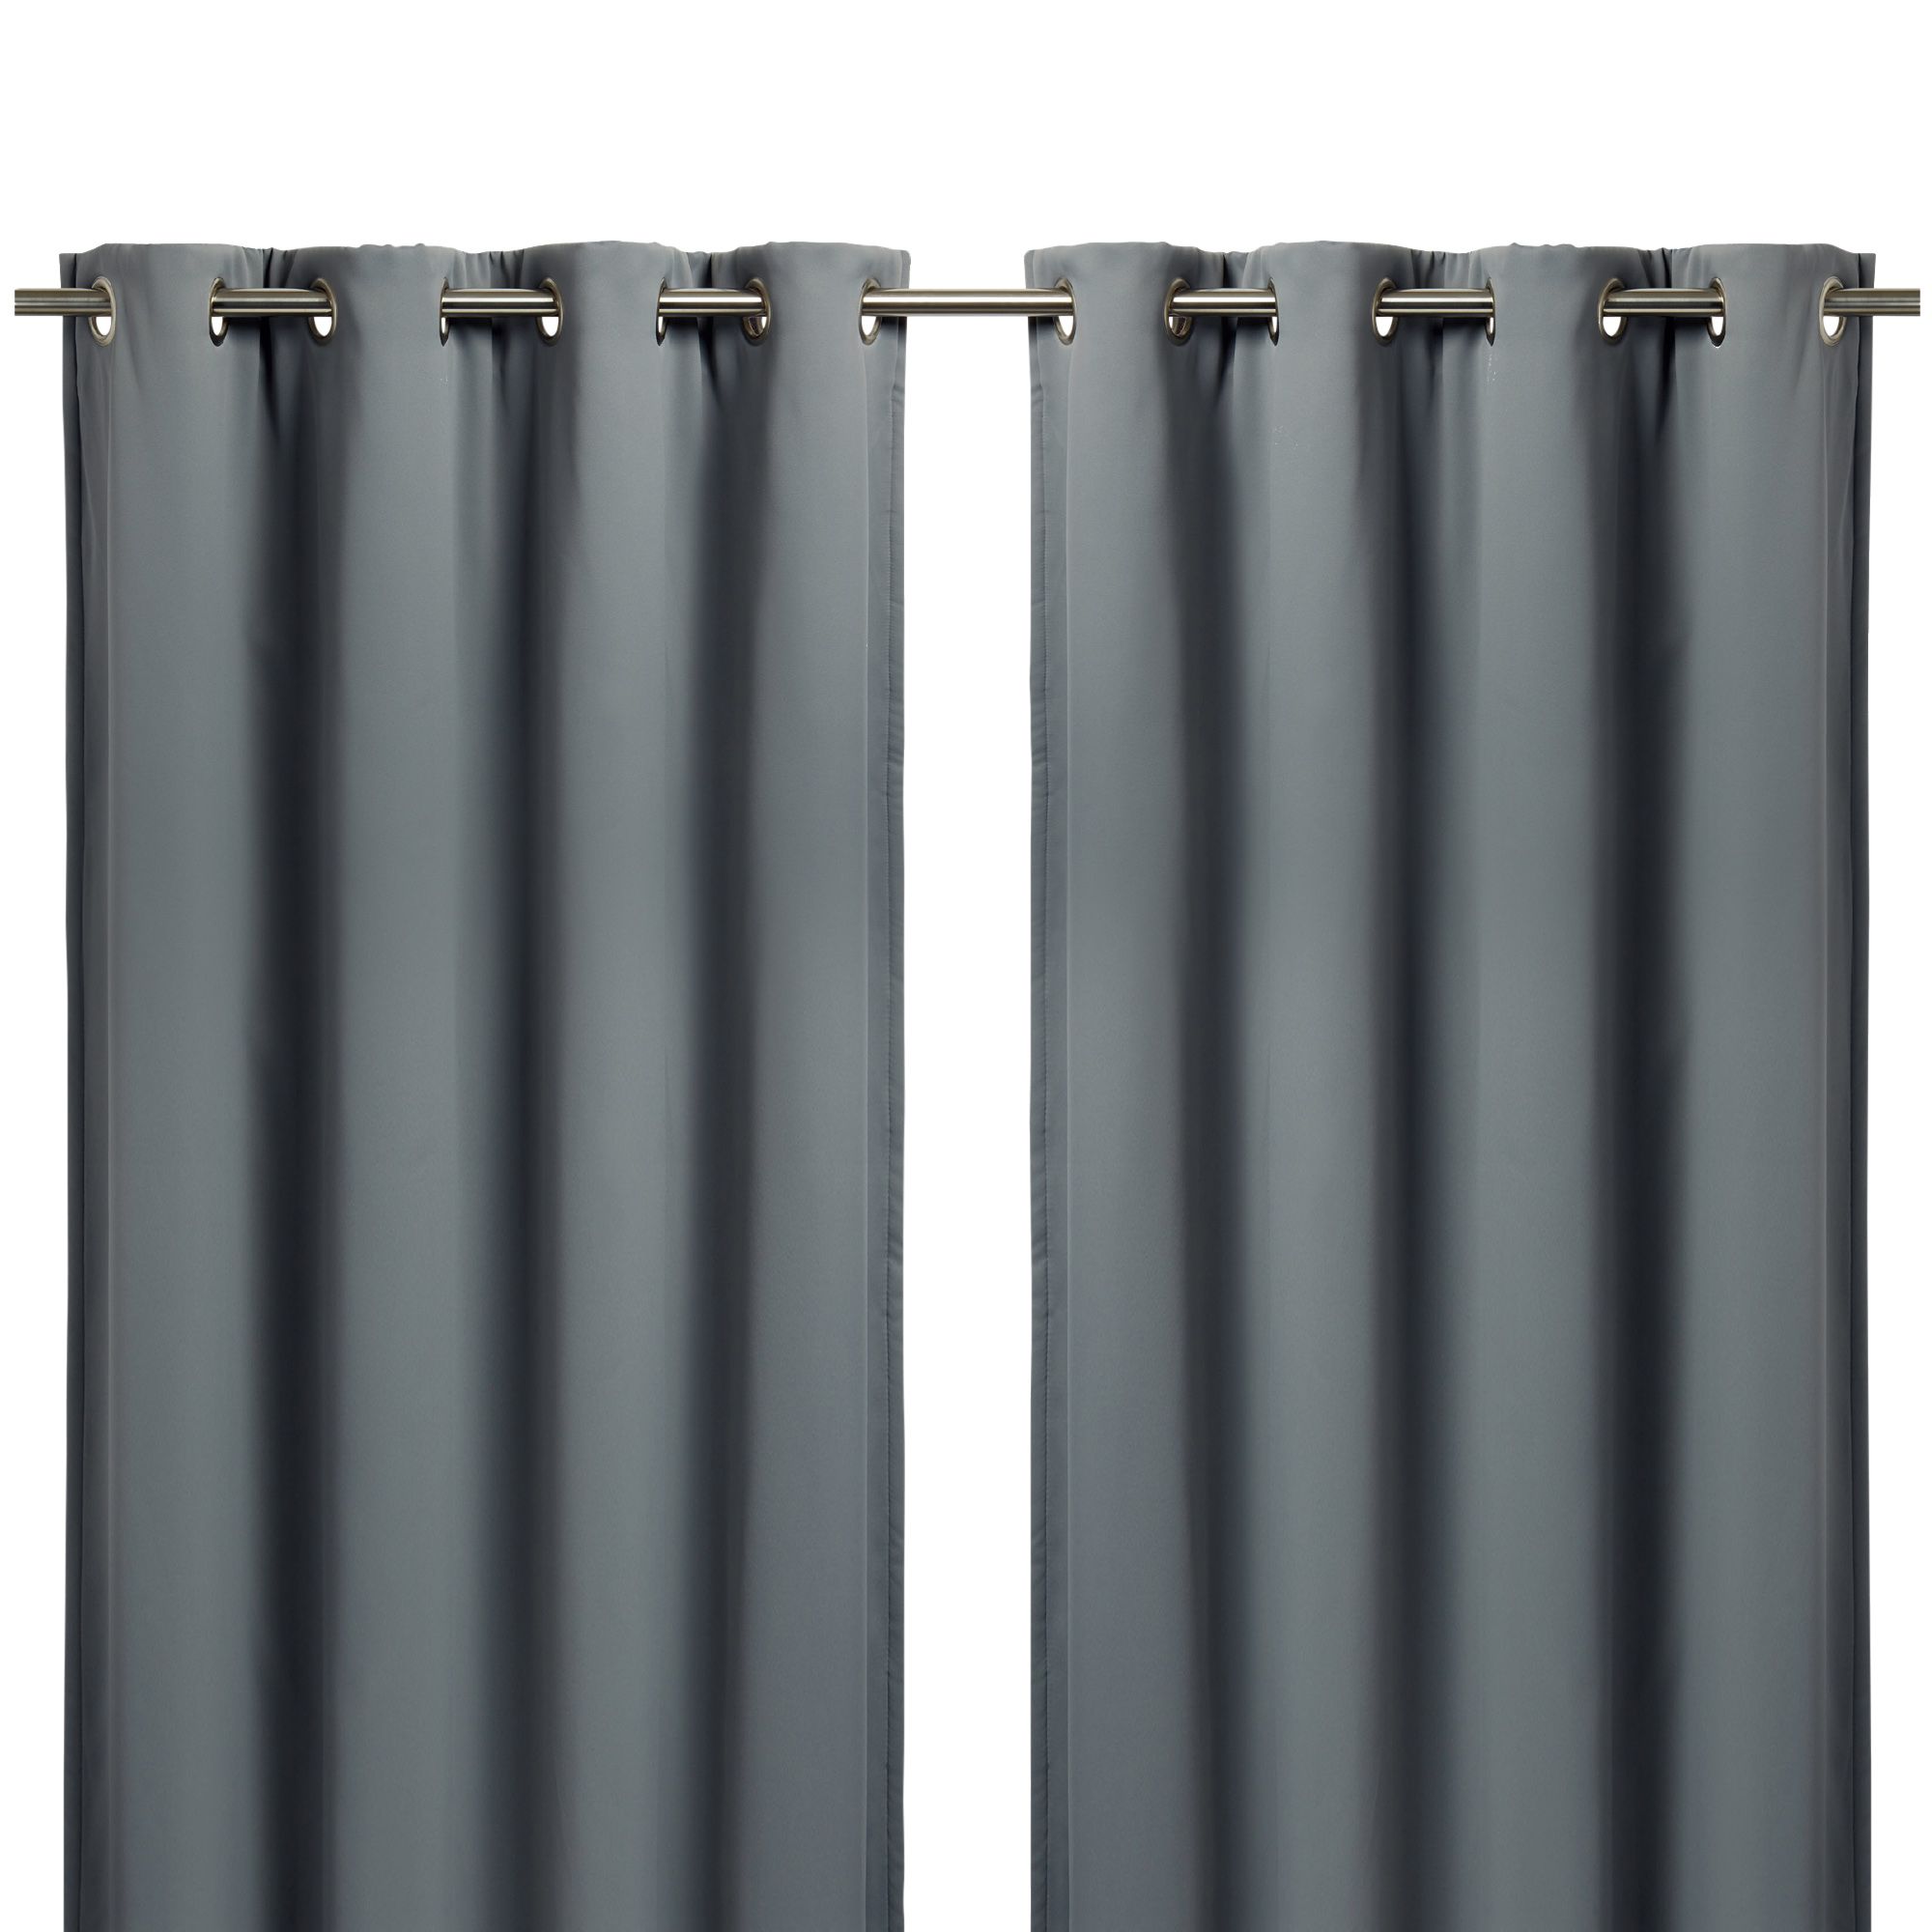 Vestris Grey Plain Blackout & thermal Eyelet Curtain (W)228cm (L)228cm, Pair